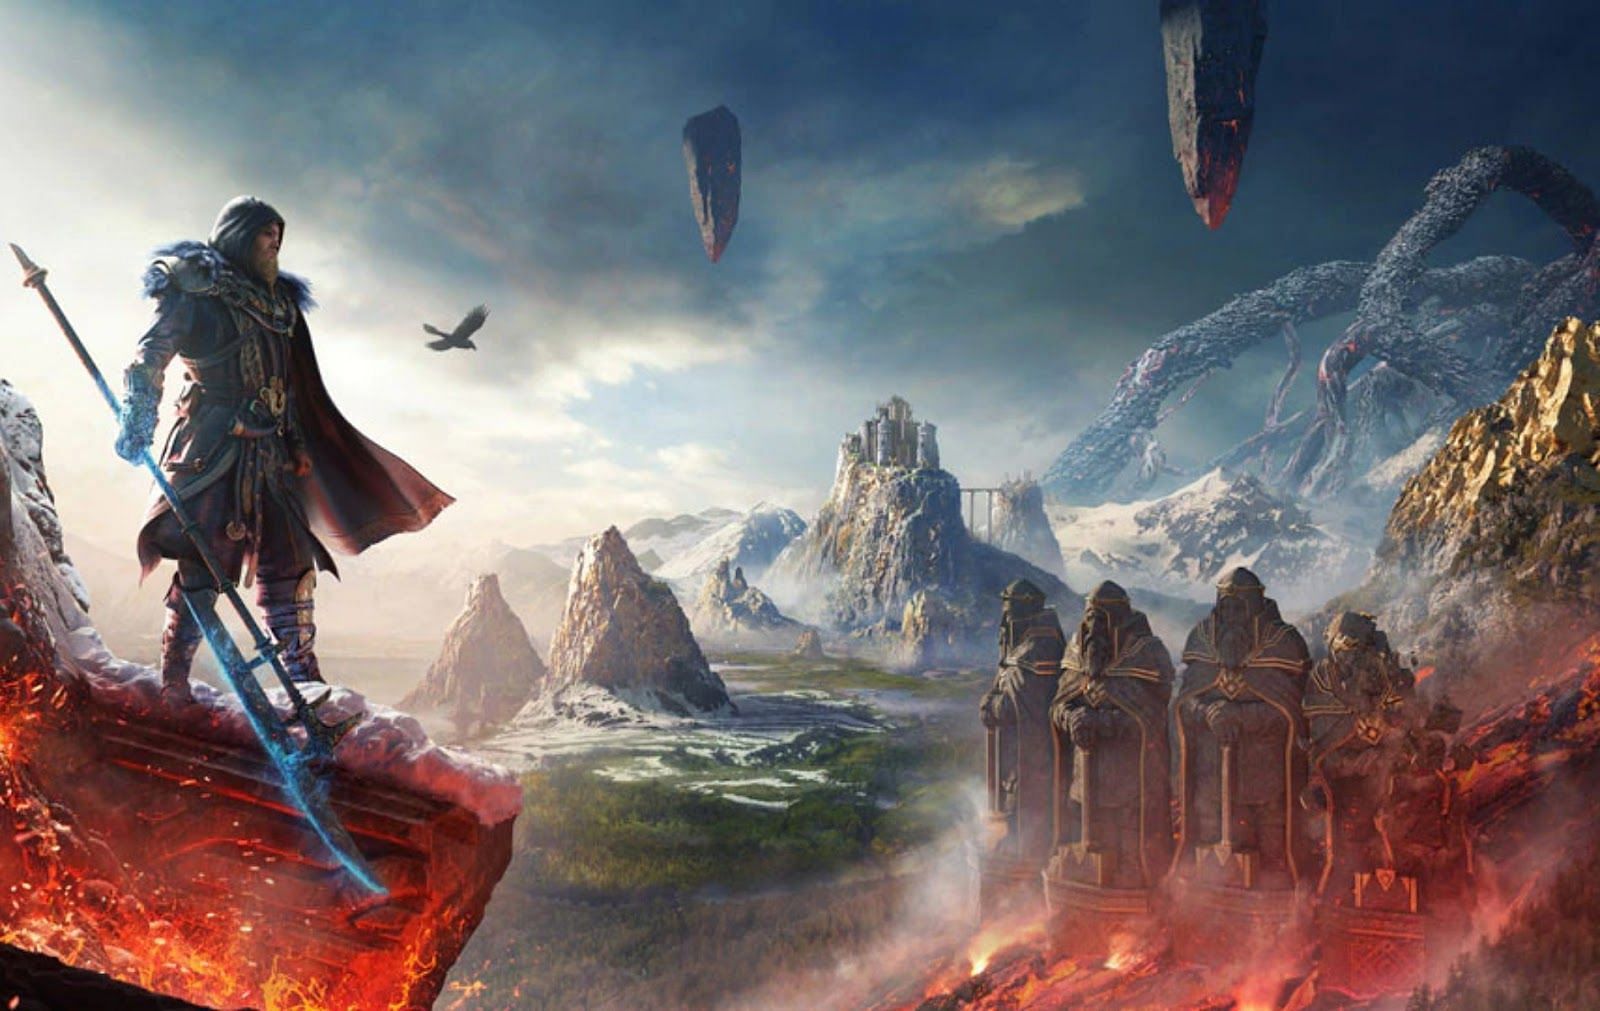 When does Assassin’s Creed Valhalla: Dawn of Ragnarök release?